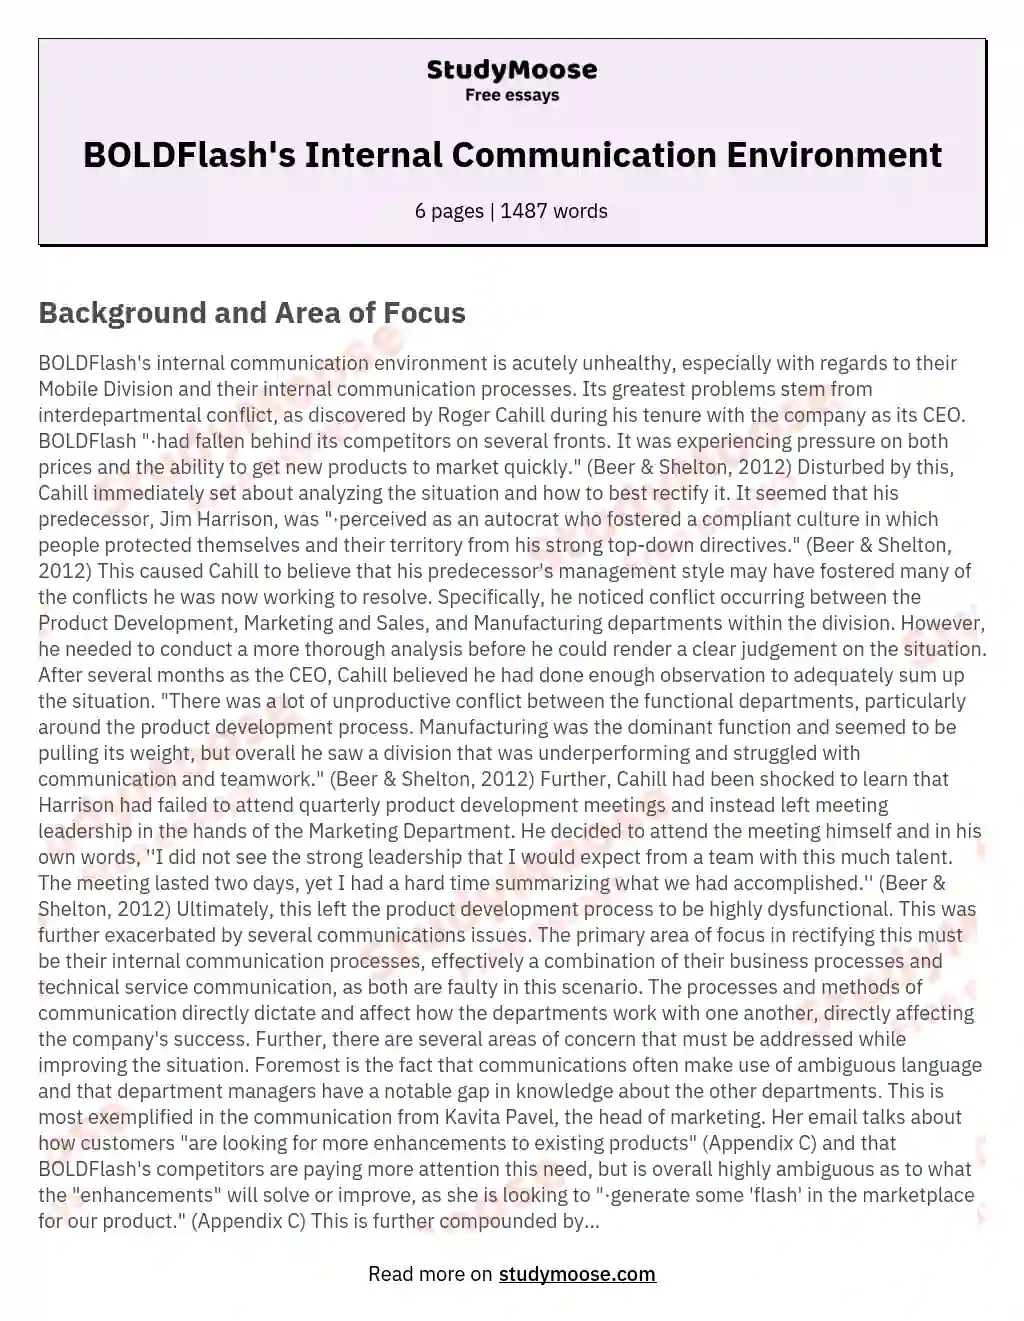 BOLDFlash's Internal Communication Environment essay